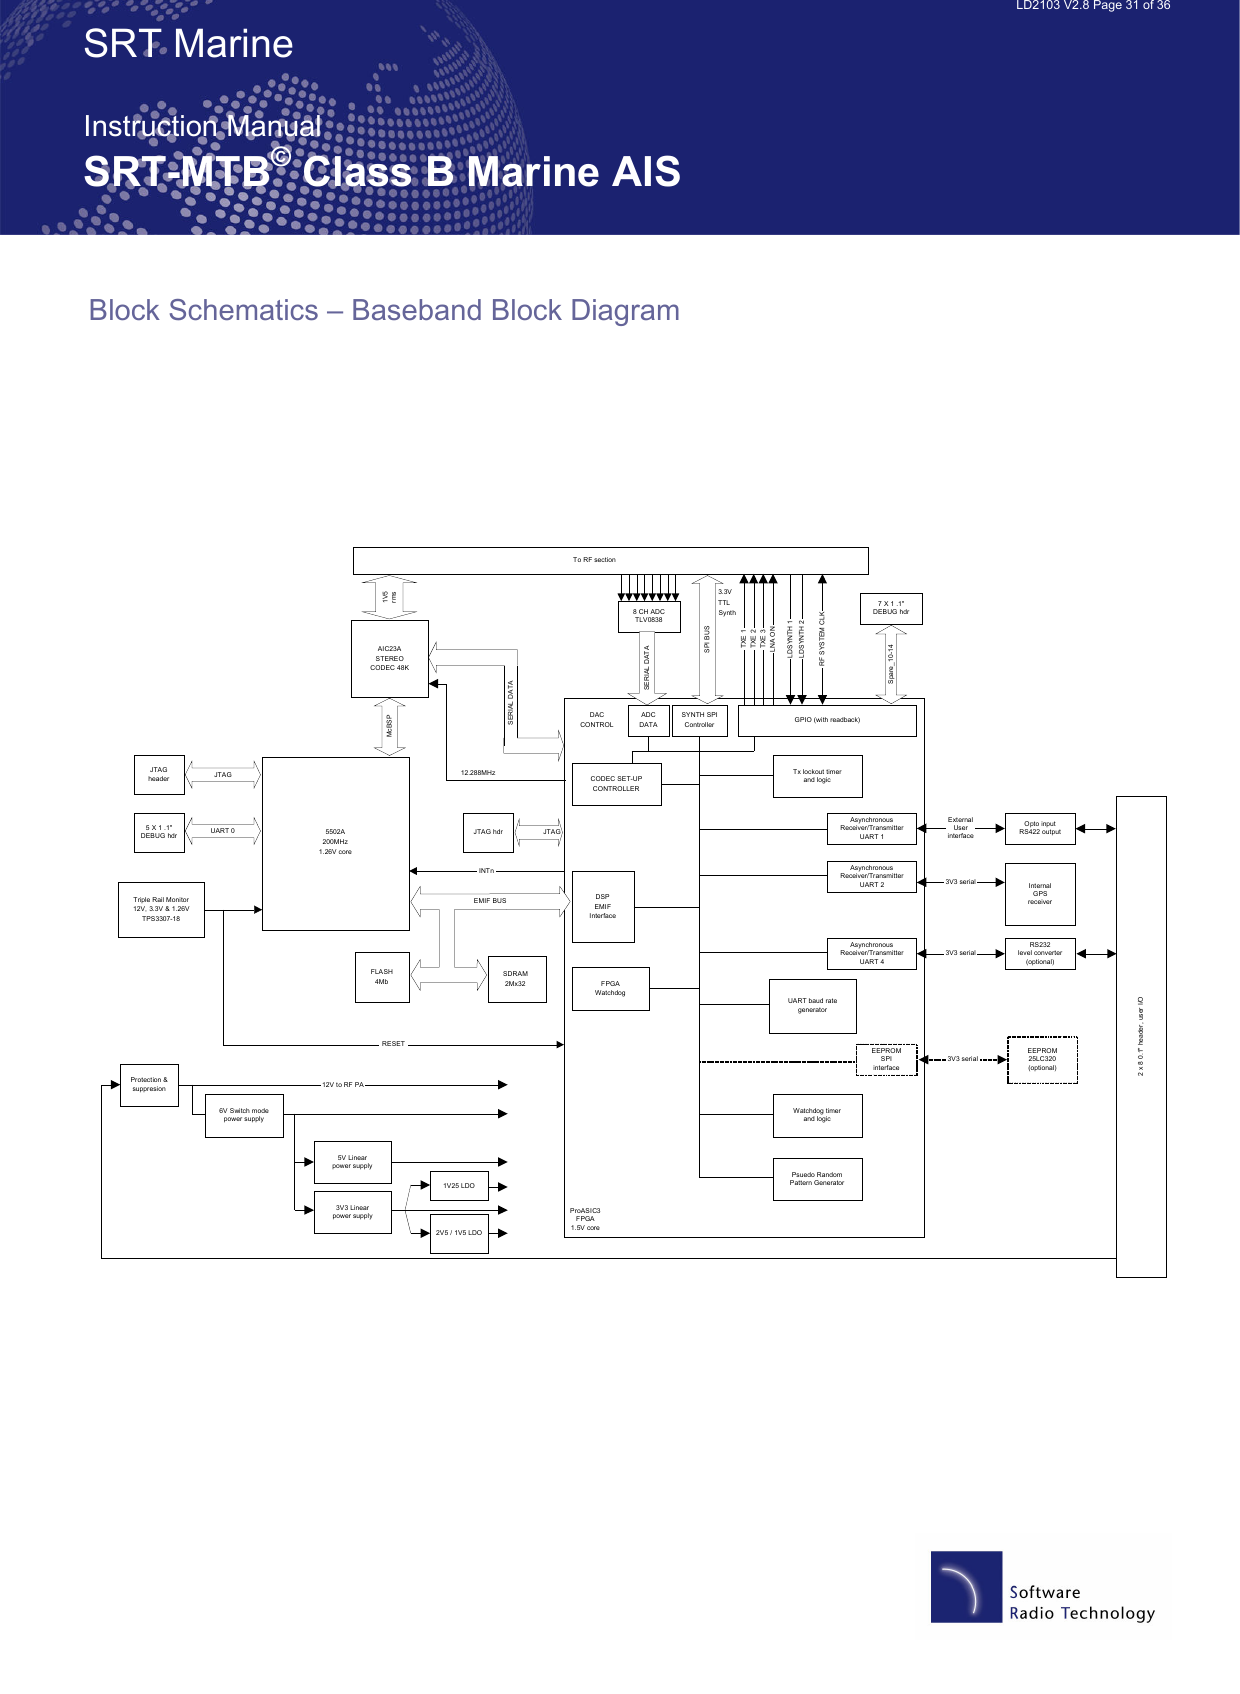   LD2103 V2.8 Page 31 of 36 SRT Marine  Instruction Manual SRT-MTB© Class B Marine AIS Block Schematics – Baseband Block Diagram     5502A200MHz1.26V coreSDRAM2Mx32FLASH4MbProASIC3FPGA1.5V core12.288MHzTriple Rail Monitor12V, 3.3V &amp; 1.26VTPS3307-18AIC23ASTEREOCODEC 48KMcBSP 1V5rmsOpto inputRS422 outputAsynchronousReceiver/TransmitterUART 1GPIO (with readback)DSPEMIFInterfaceUART baud rategeneratorTo RF section12V to RF PAProtection &amp;suppresion2 x 8 0.1&quot; header, user I/OSYNTH SPIControllerRESETFPGAWatchdogJTAGJTAGheaderINTnCODEC SET-UPCONTROLLERDACCONTROLADCDATAInternalGPSreceiverRS232level converter(optional)AsynchronousReceiver/TransmitterUART 2AsynchronousReceiver/TransmitterUART 46V Switch modepower supply5V Linearpower supply3V3 Linearpower supply1V25 LDO2V5 / 1V5 LDOSERIAL DATA8 CH ADCTLV08387 X 1 .1&quot;DEBUG hdrSpare_10-14EEPROMSPIinterfaceEEPROM25LC320(optional)ExternalUserinterface3V3 serial3V3 serial3V3 serial3.3VTTLSynthSPI BUSTXE 1TXE 2TXE 3LNA ONLDSYNTH 1LDSYNTH 2RF SYSTEM CLKSERIAL DATA5 X 1 .1&quot;DEBUG hdrEMIF BUSTx lockout timerand logicWatchdog timerand logicPsuedo RandomPattern GeneratorUART 0 JTAGJTAG hdr